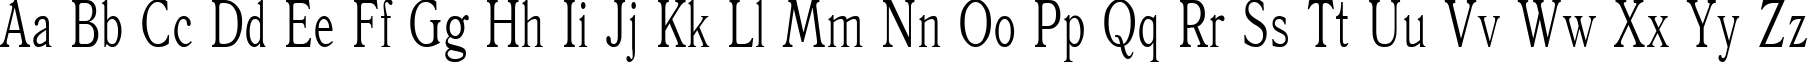 Пример написания английского алфавита шрифтом Antiqua70n